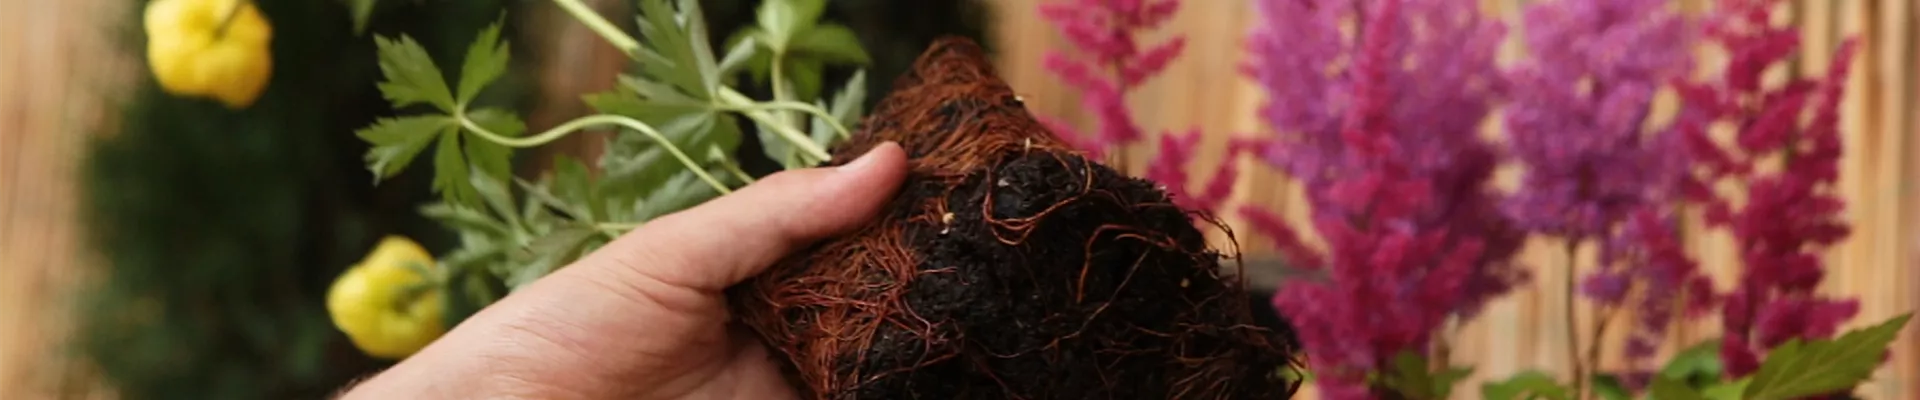 Trollblume - Einpflanzen ins Beet (Thumbnail)0.jpg